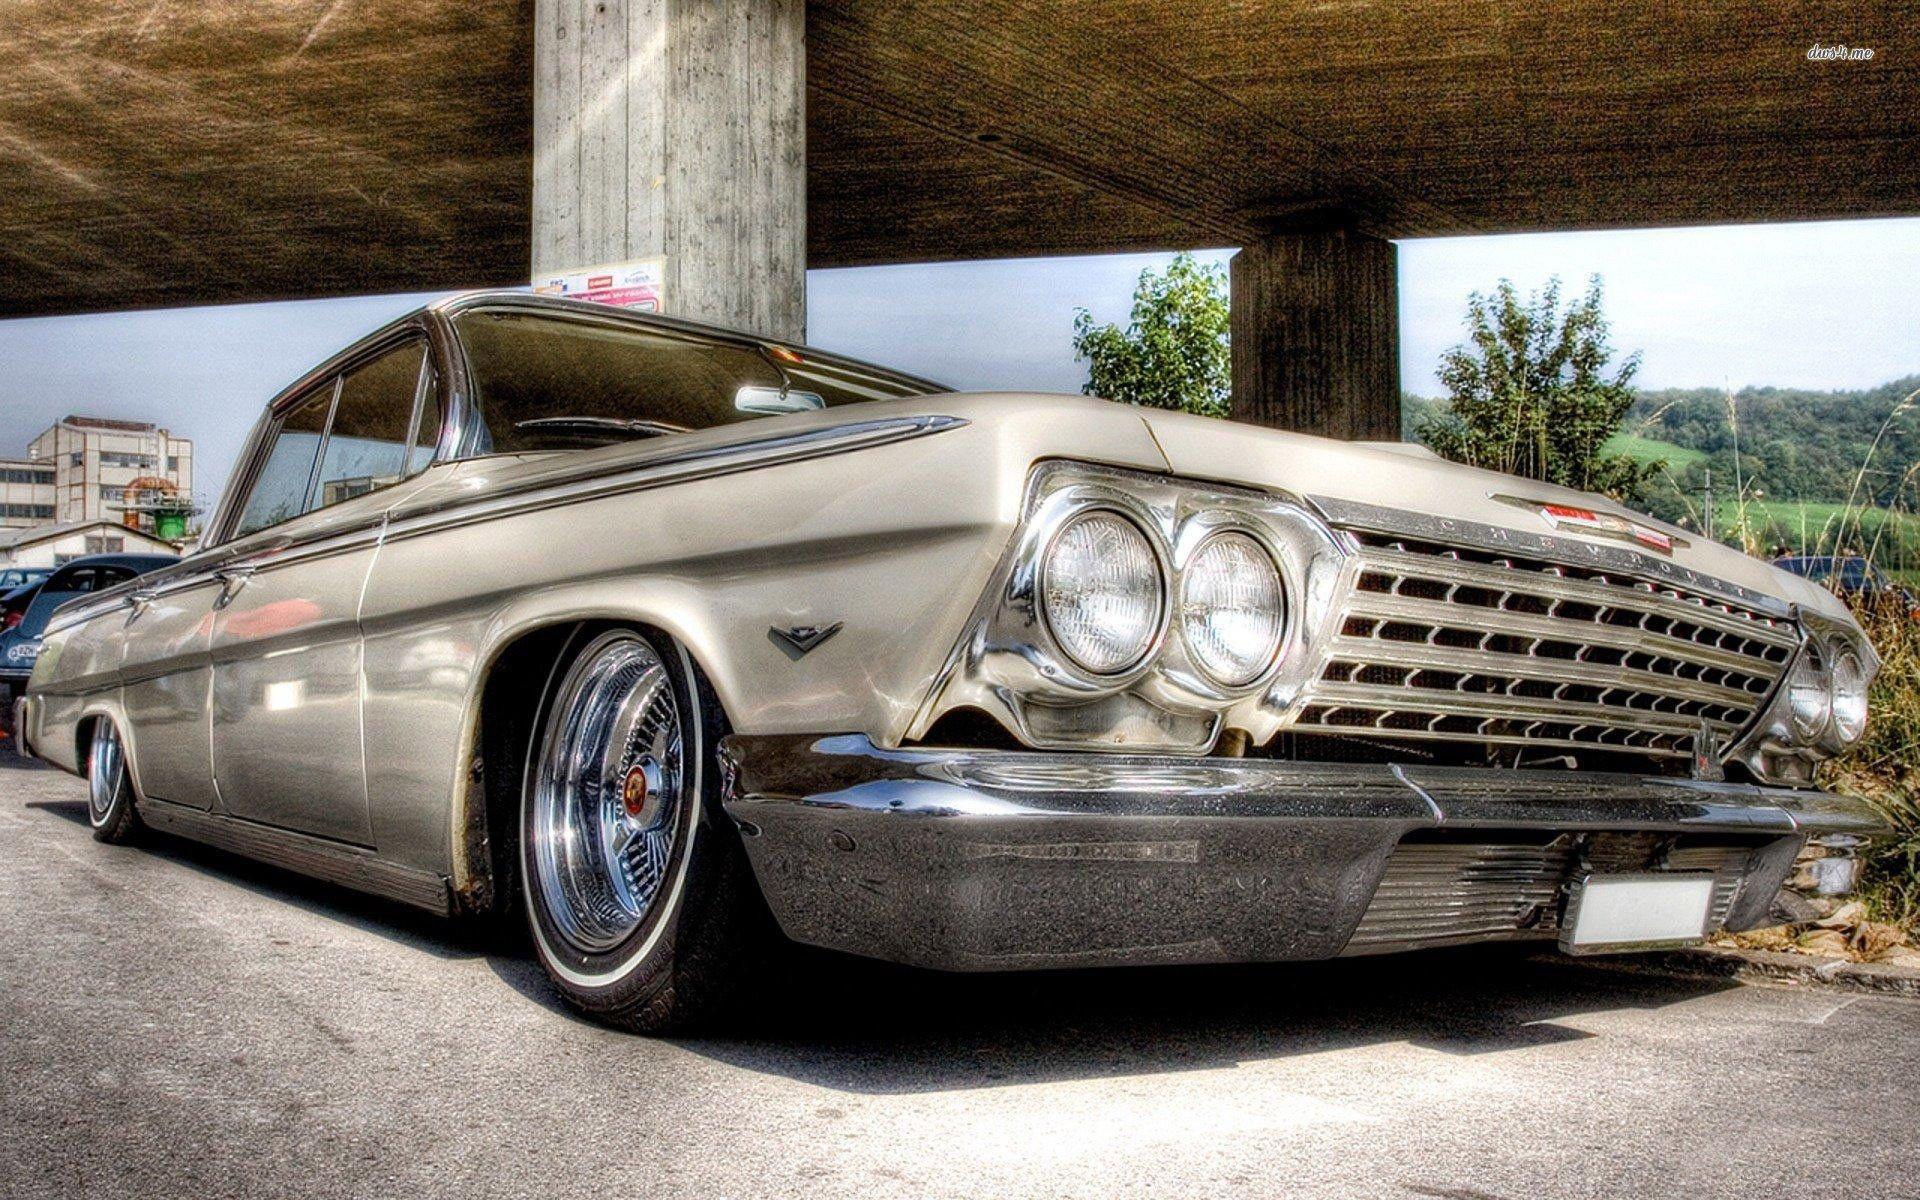 Best & Inspirational High Quality Chevrolet Impala Background